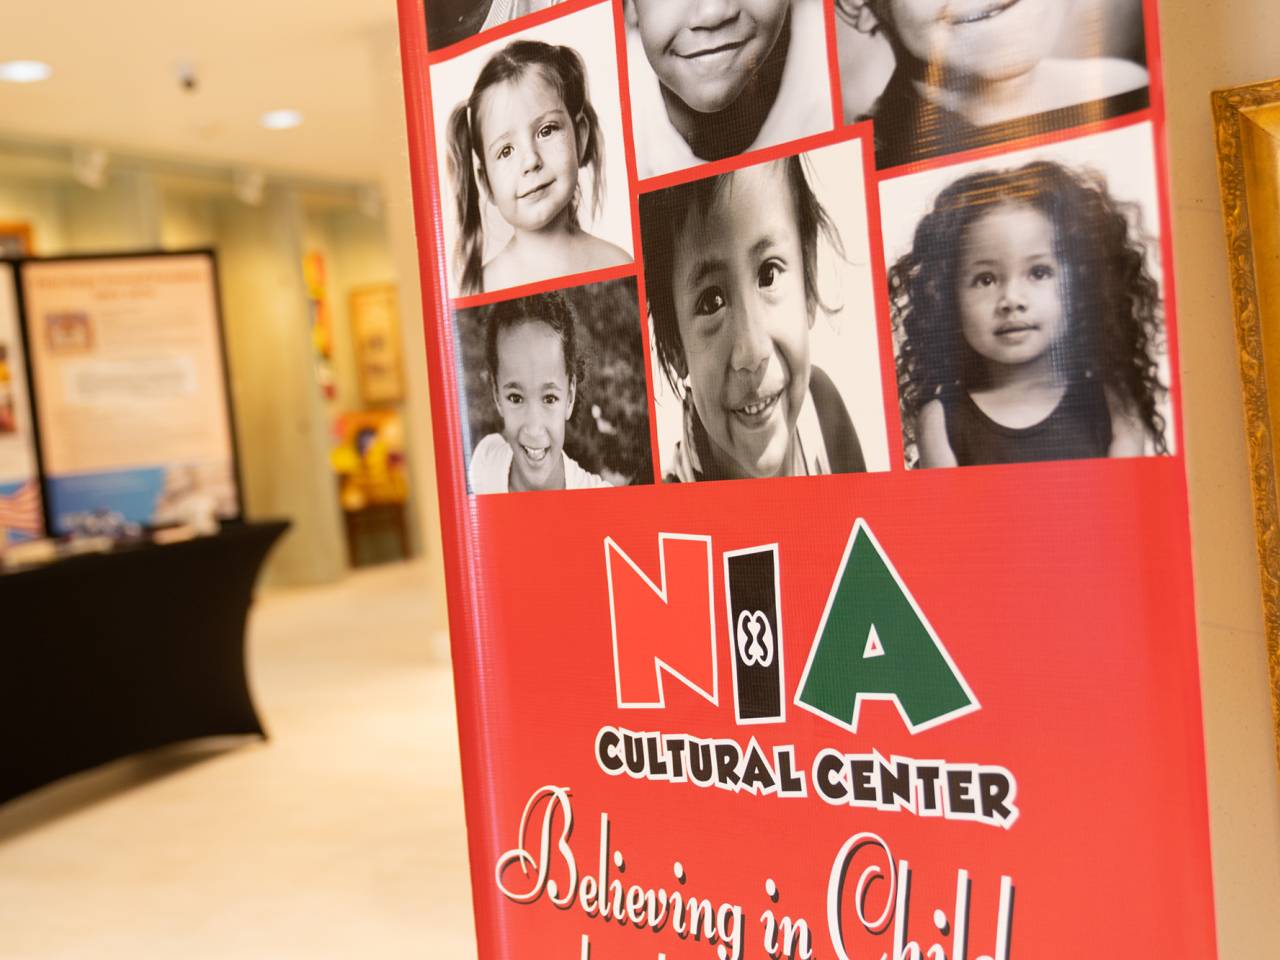 NIA Cultural Center